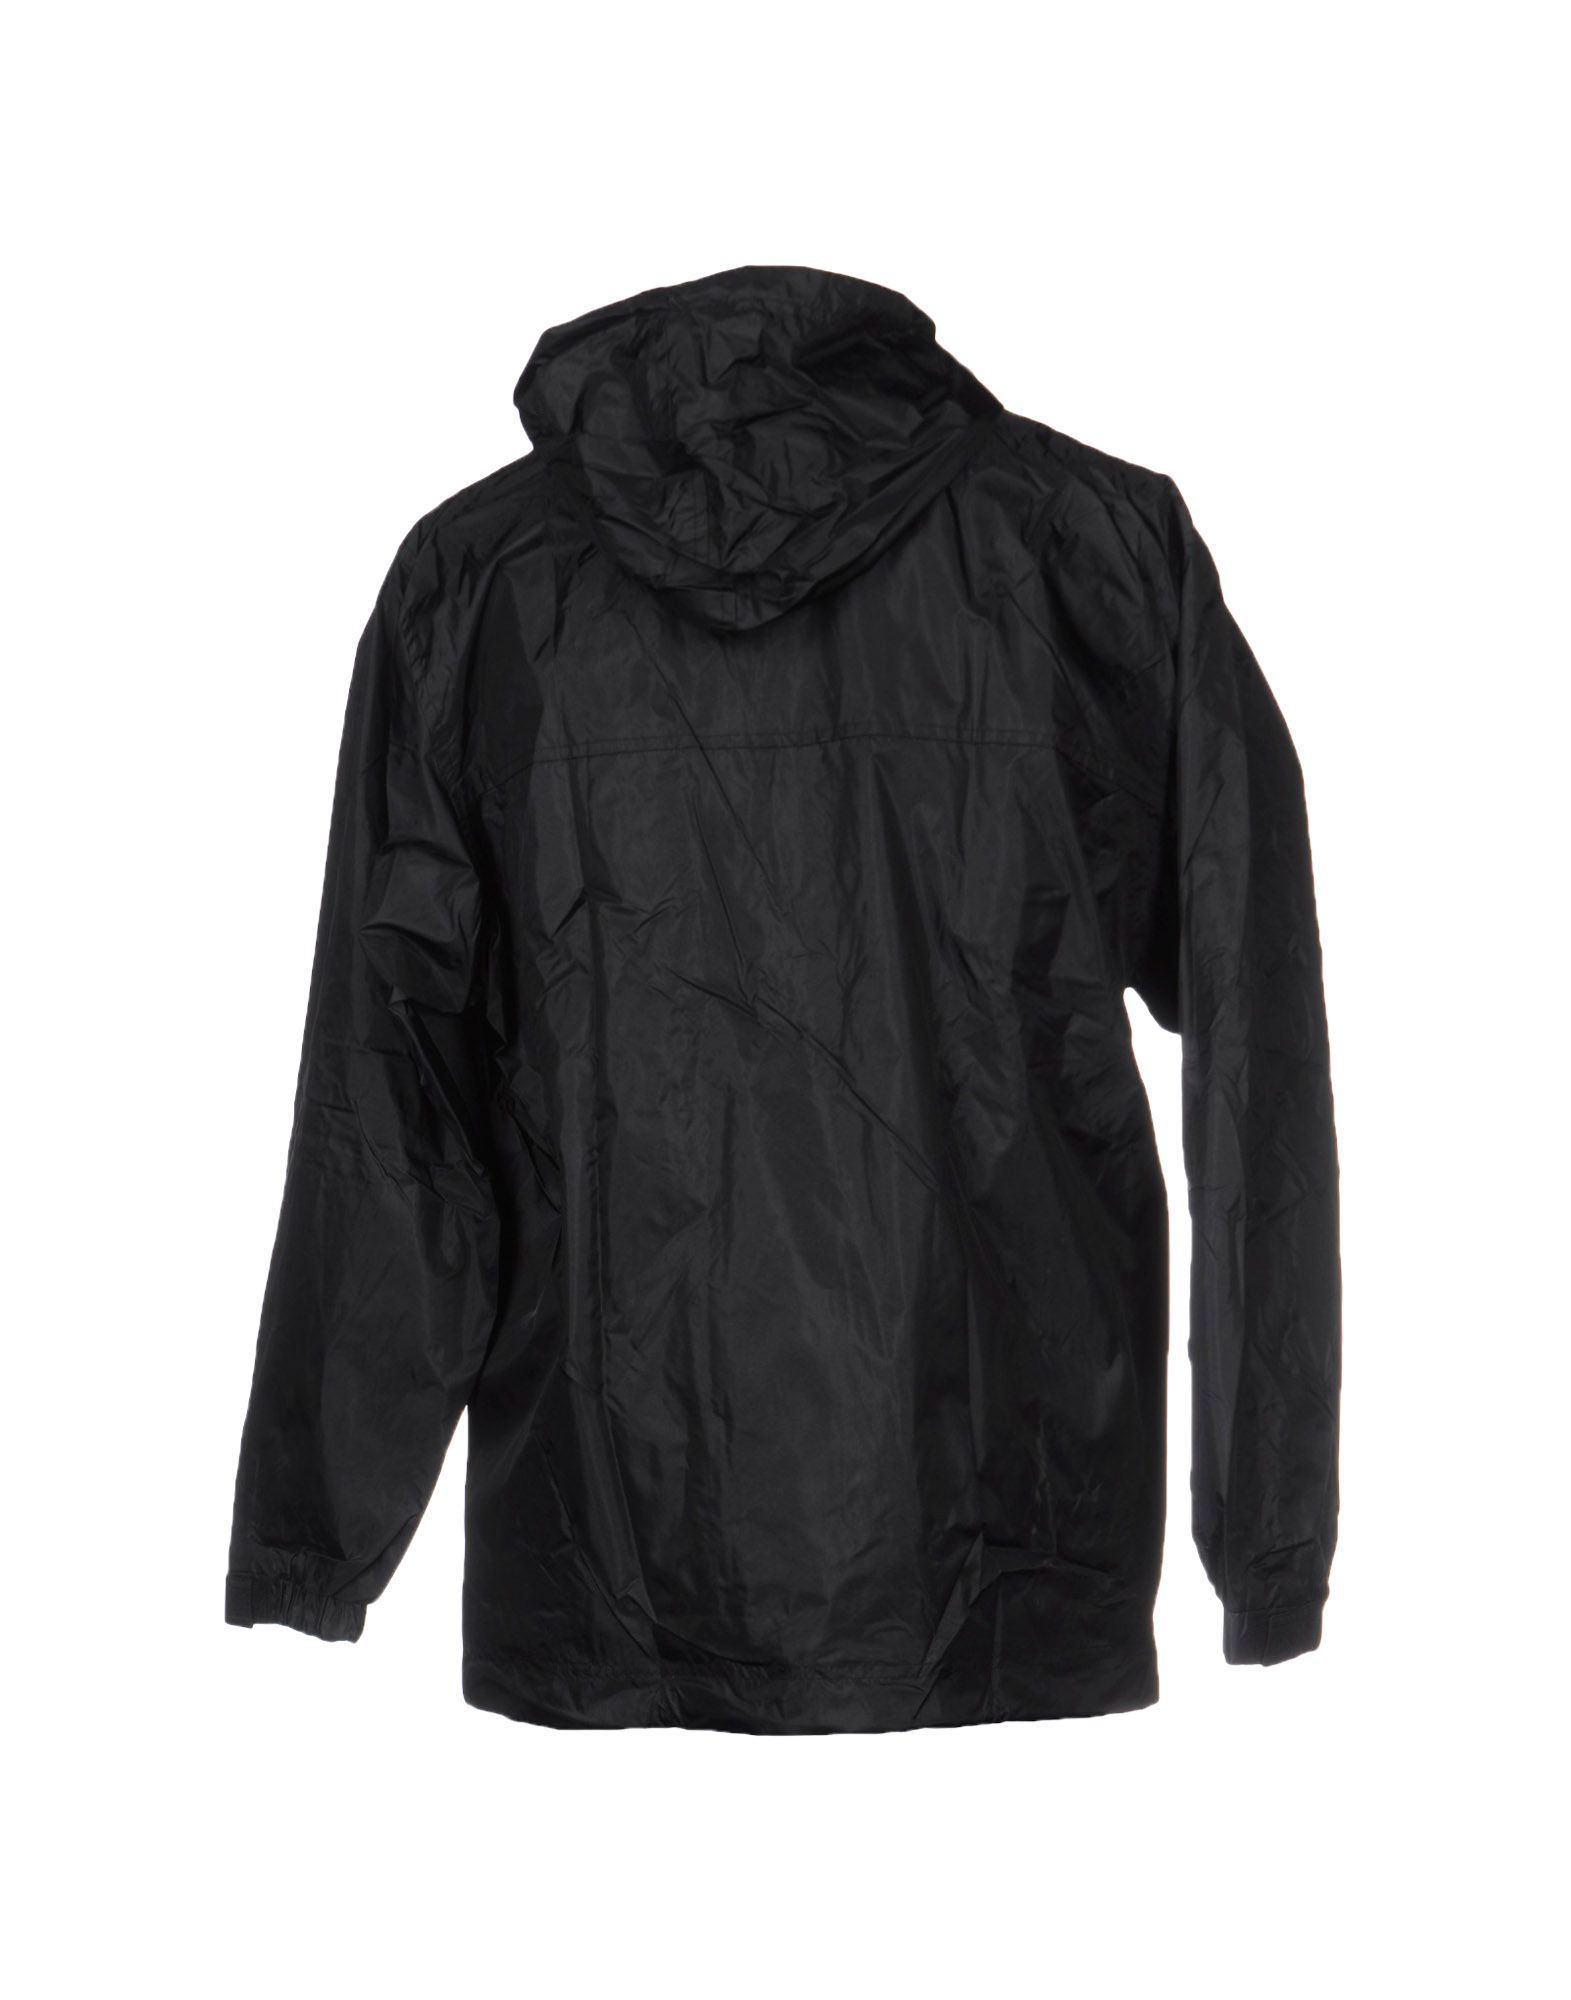 Lyst - Champion Jacket in Black for Men